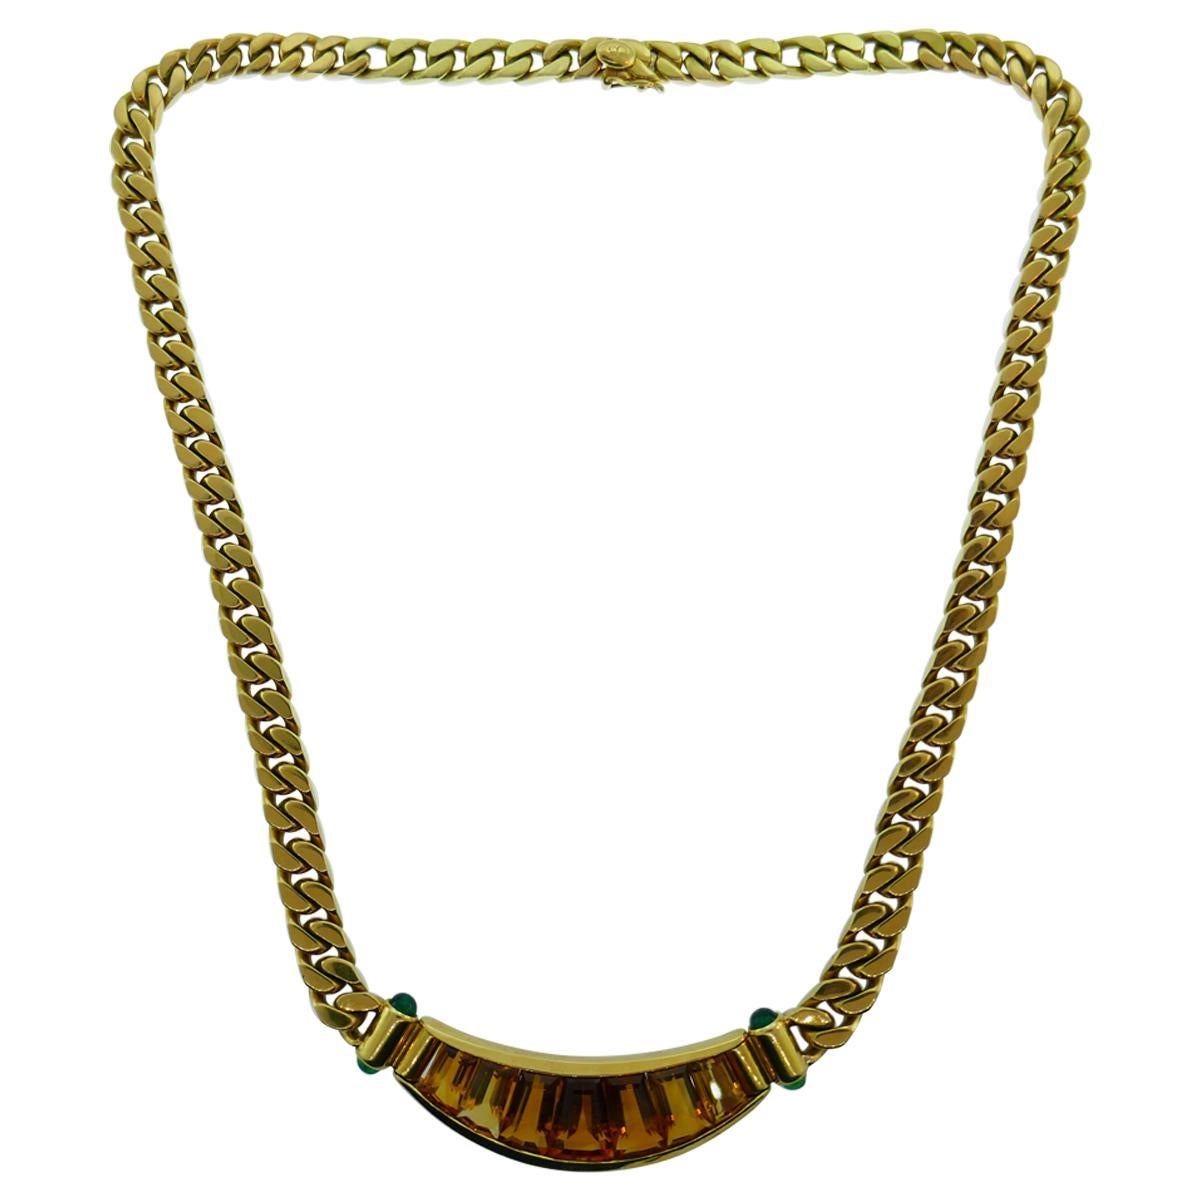 Bvlgari 18 Karat Yellow Gold, Cabochon Emerald and Citrine Necklace Vintage